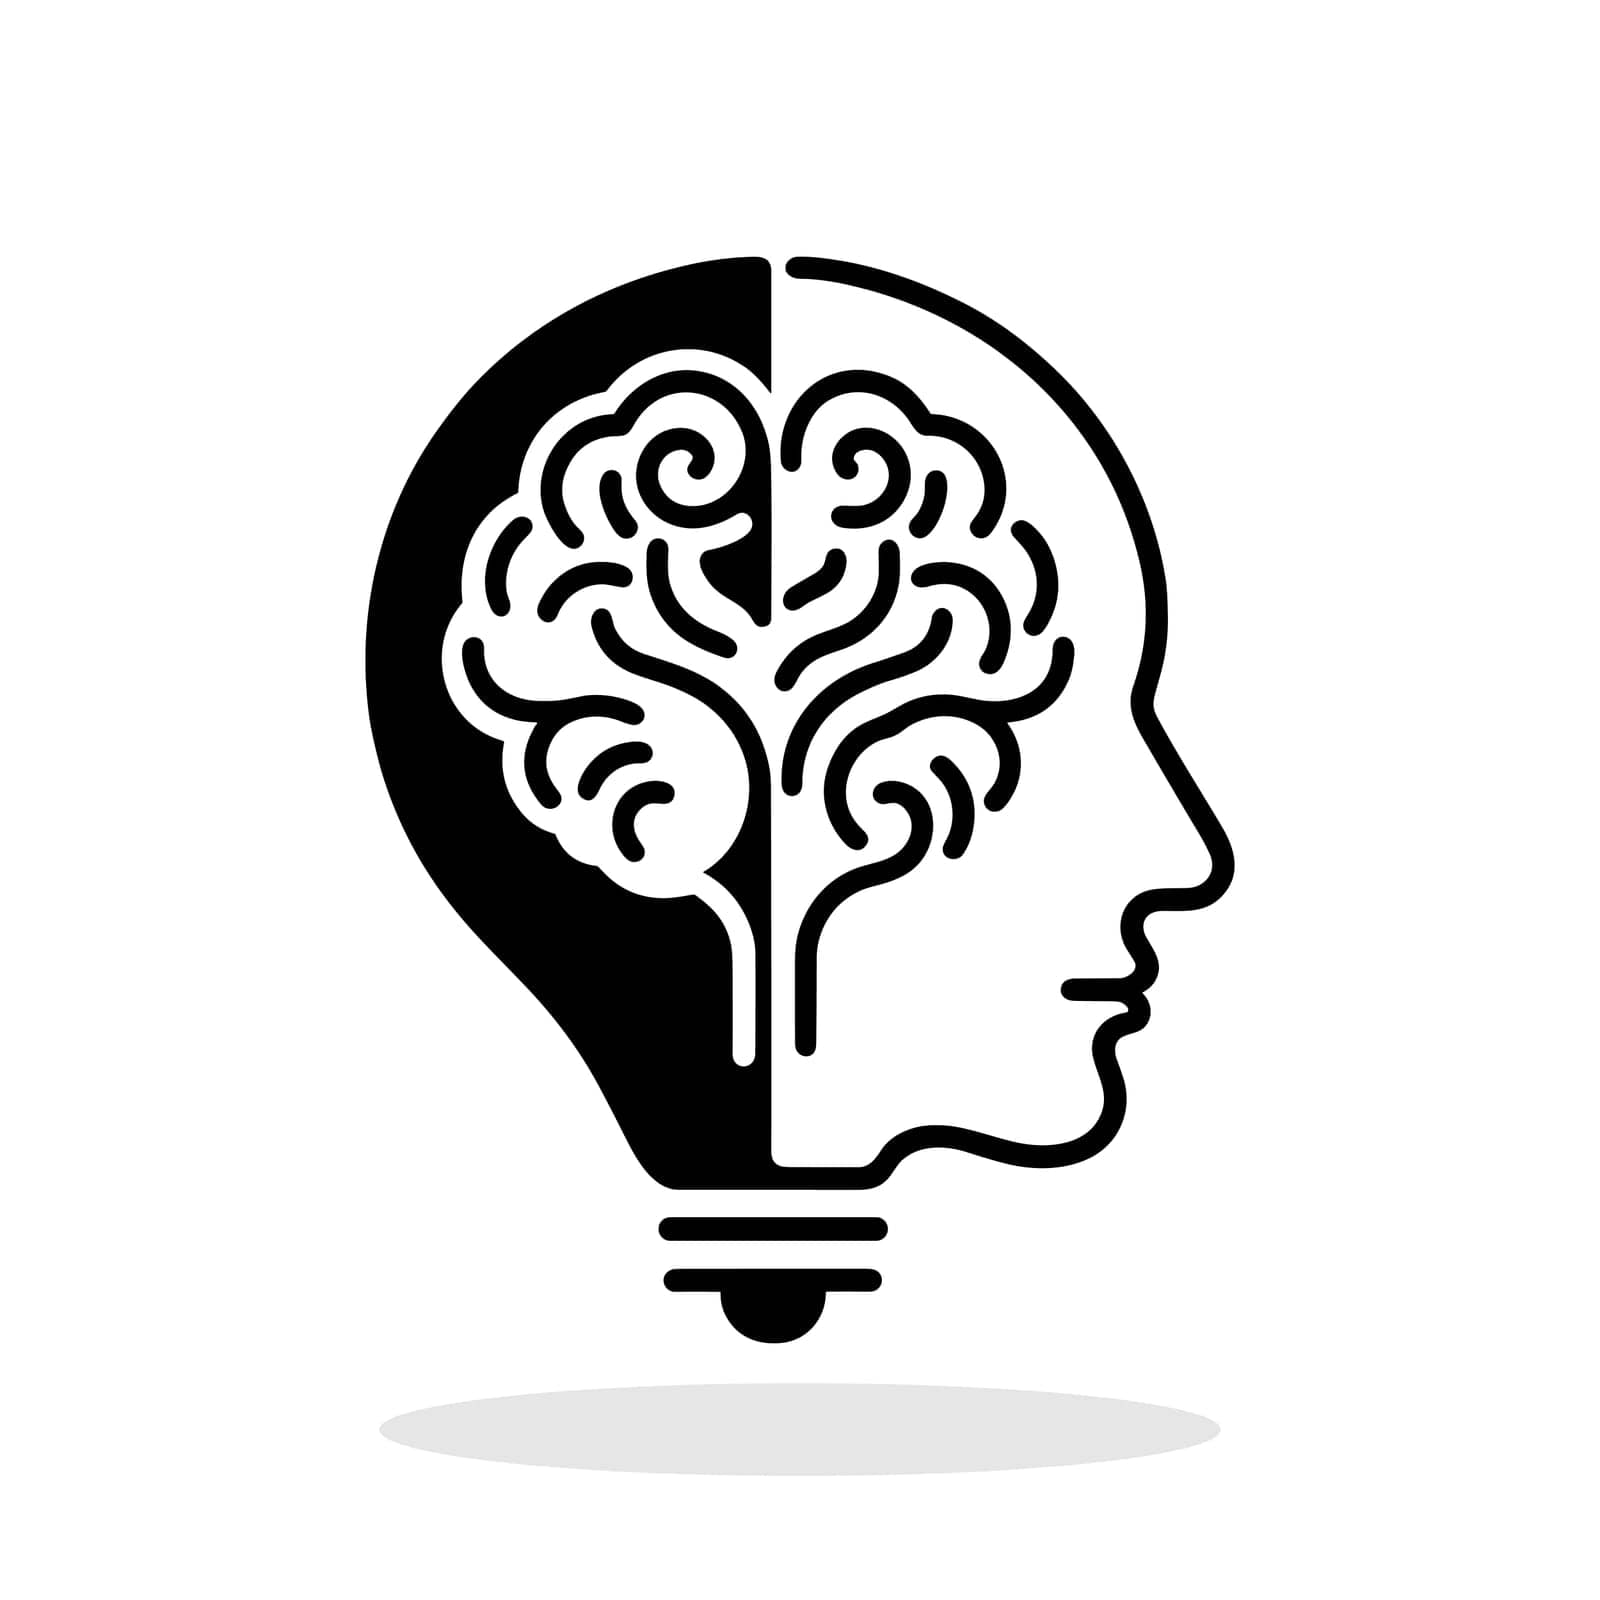 Light bulb and brain icon. Creativity symbol. Innovation symbol. Vector illustration